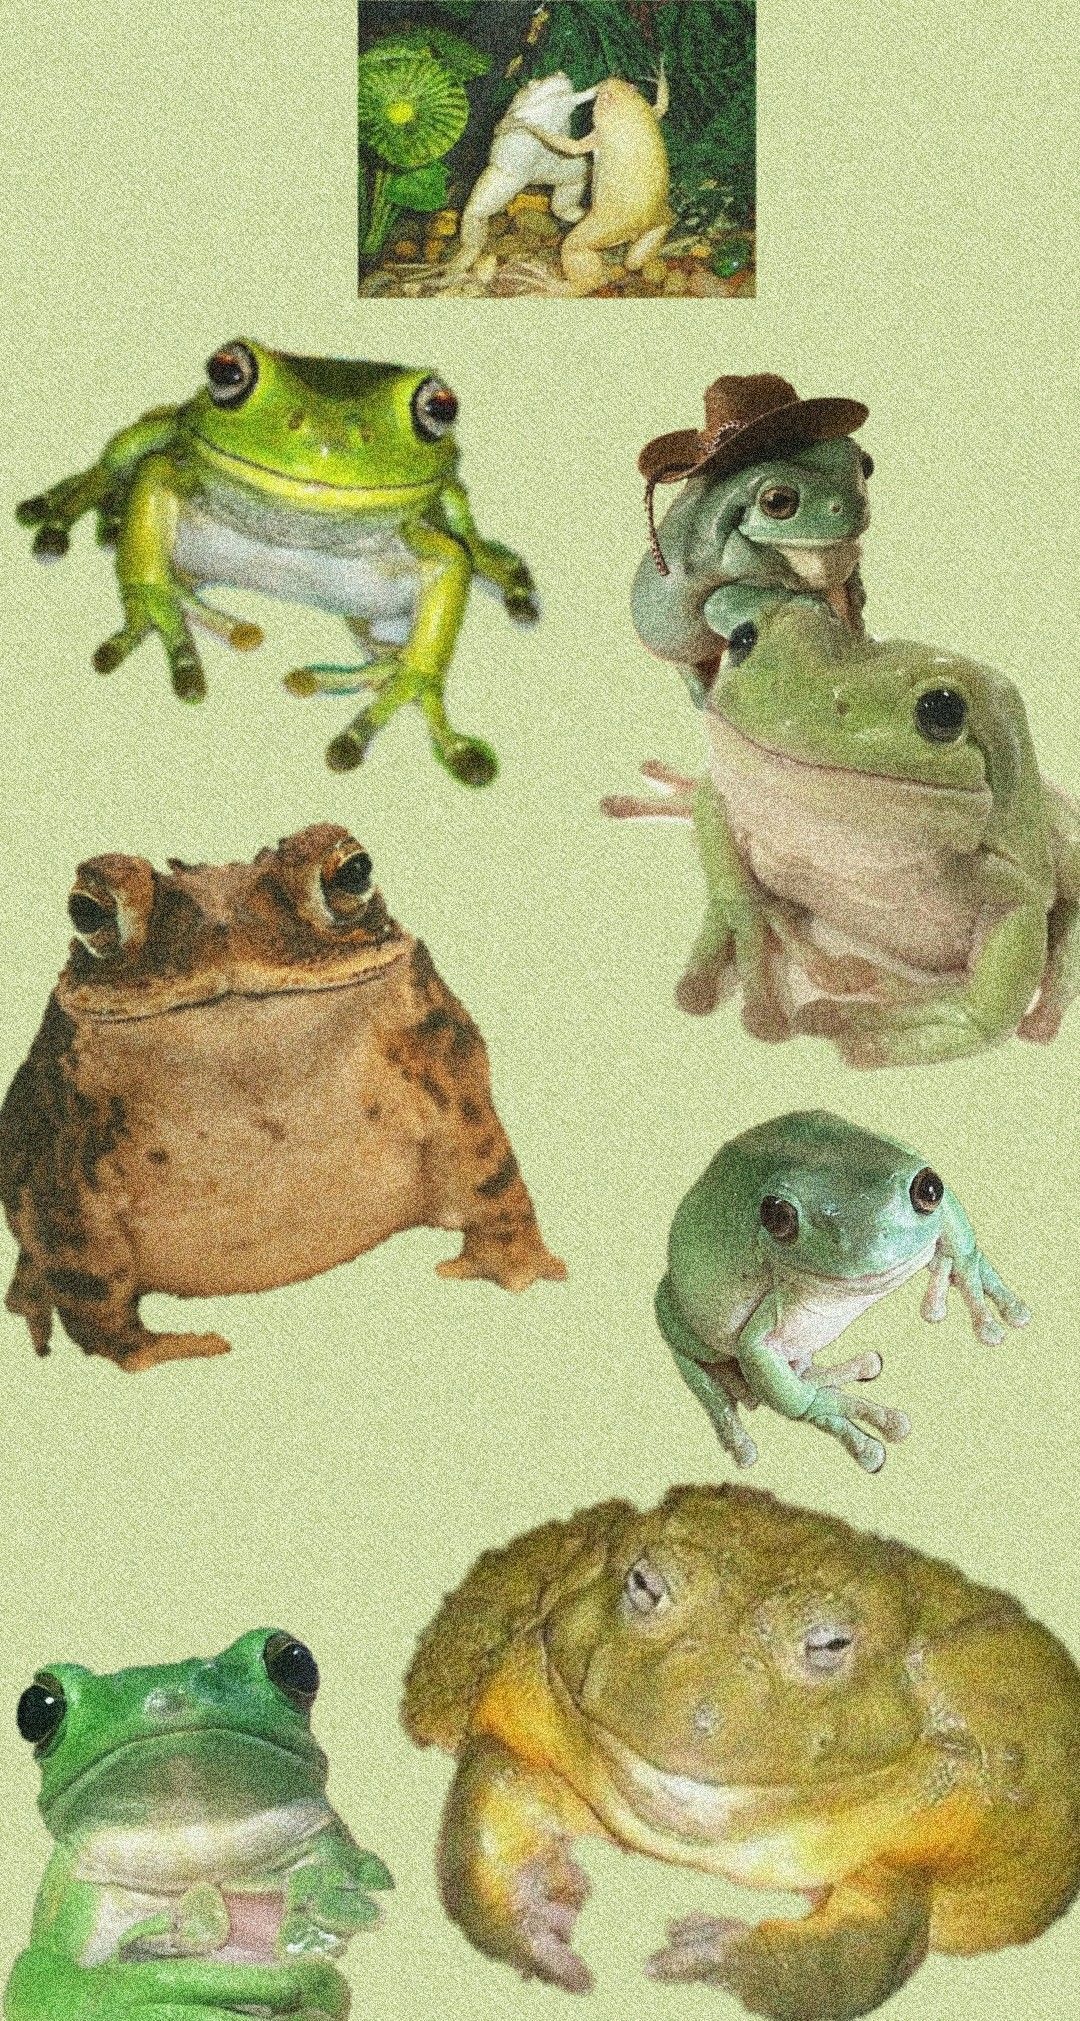 Frog wallpaper, goblincore, goblin cottagecore. Frog picture, Frog art, Frog wallpaper